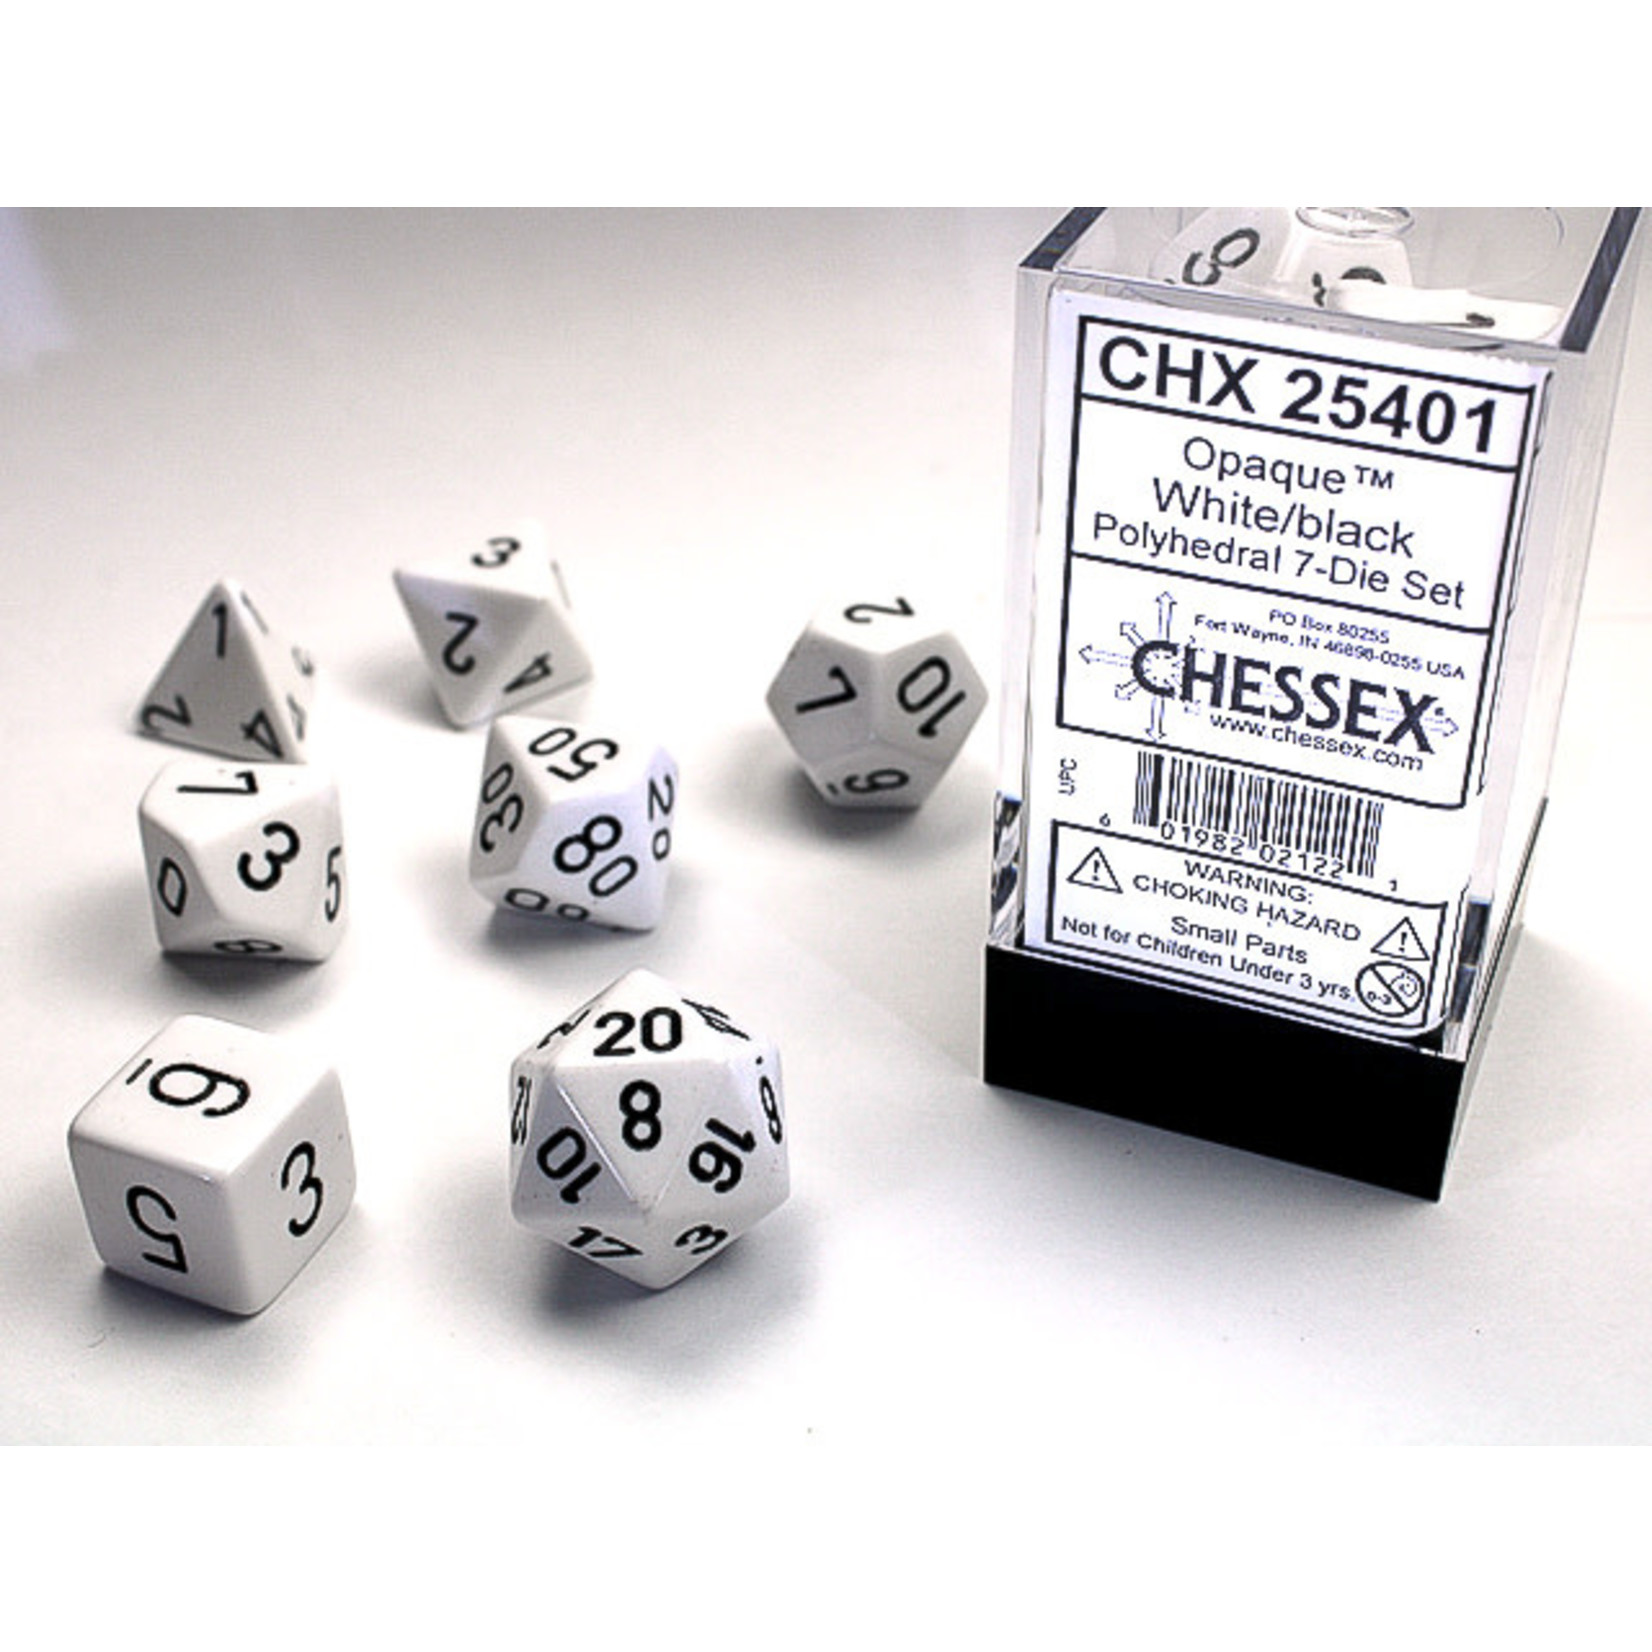 Chessex 25401 Opaque 7pc White/Black RPG Dice